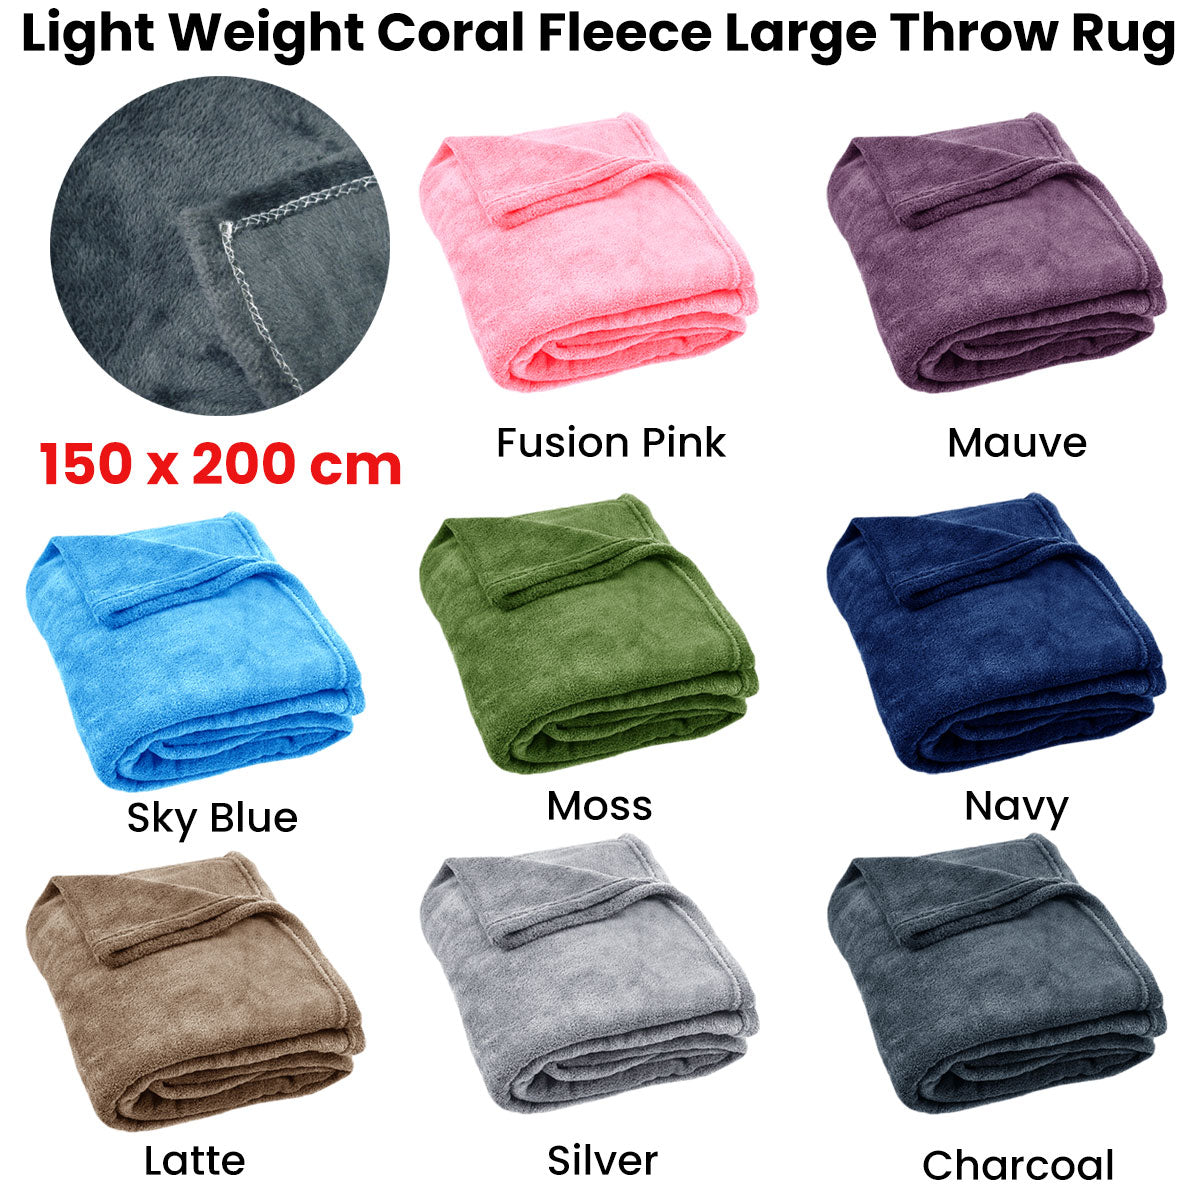 Light Weight Coral Fleece Throw Rug 150x200 cm Mauve